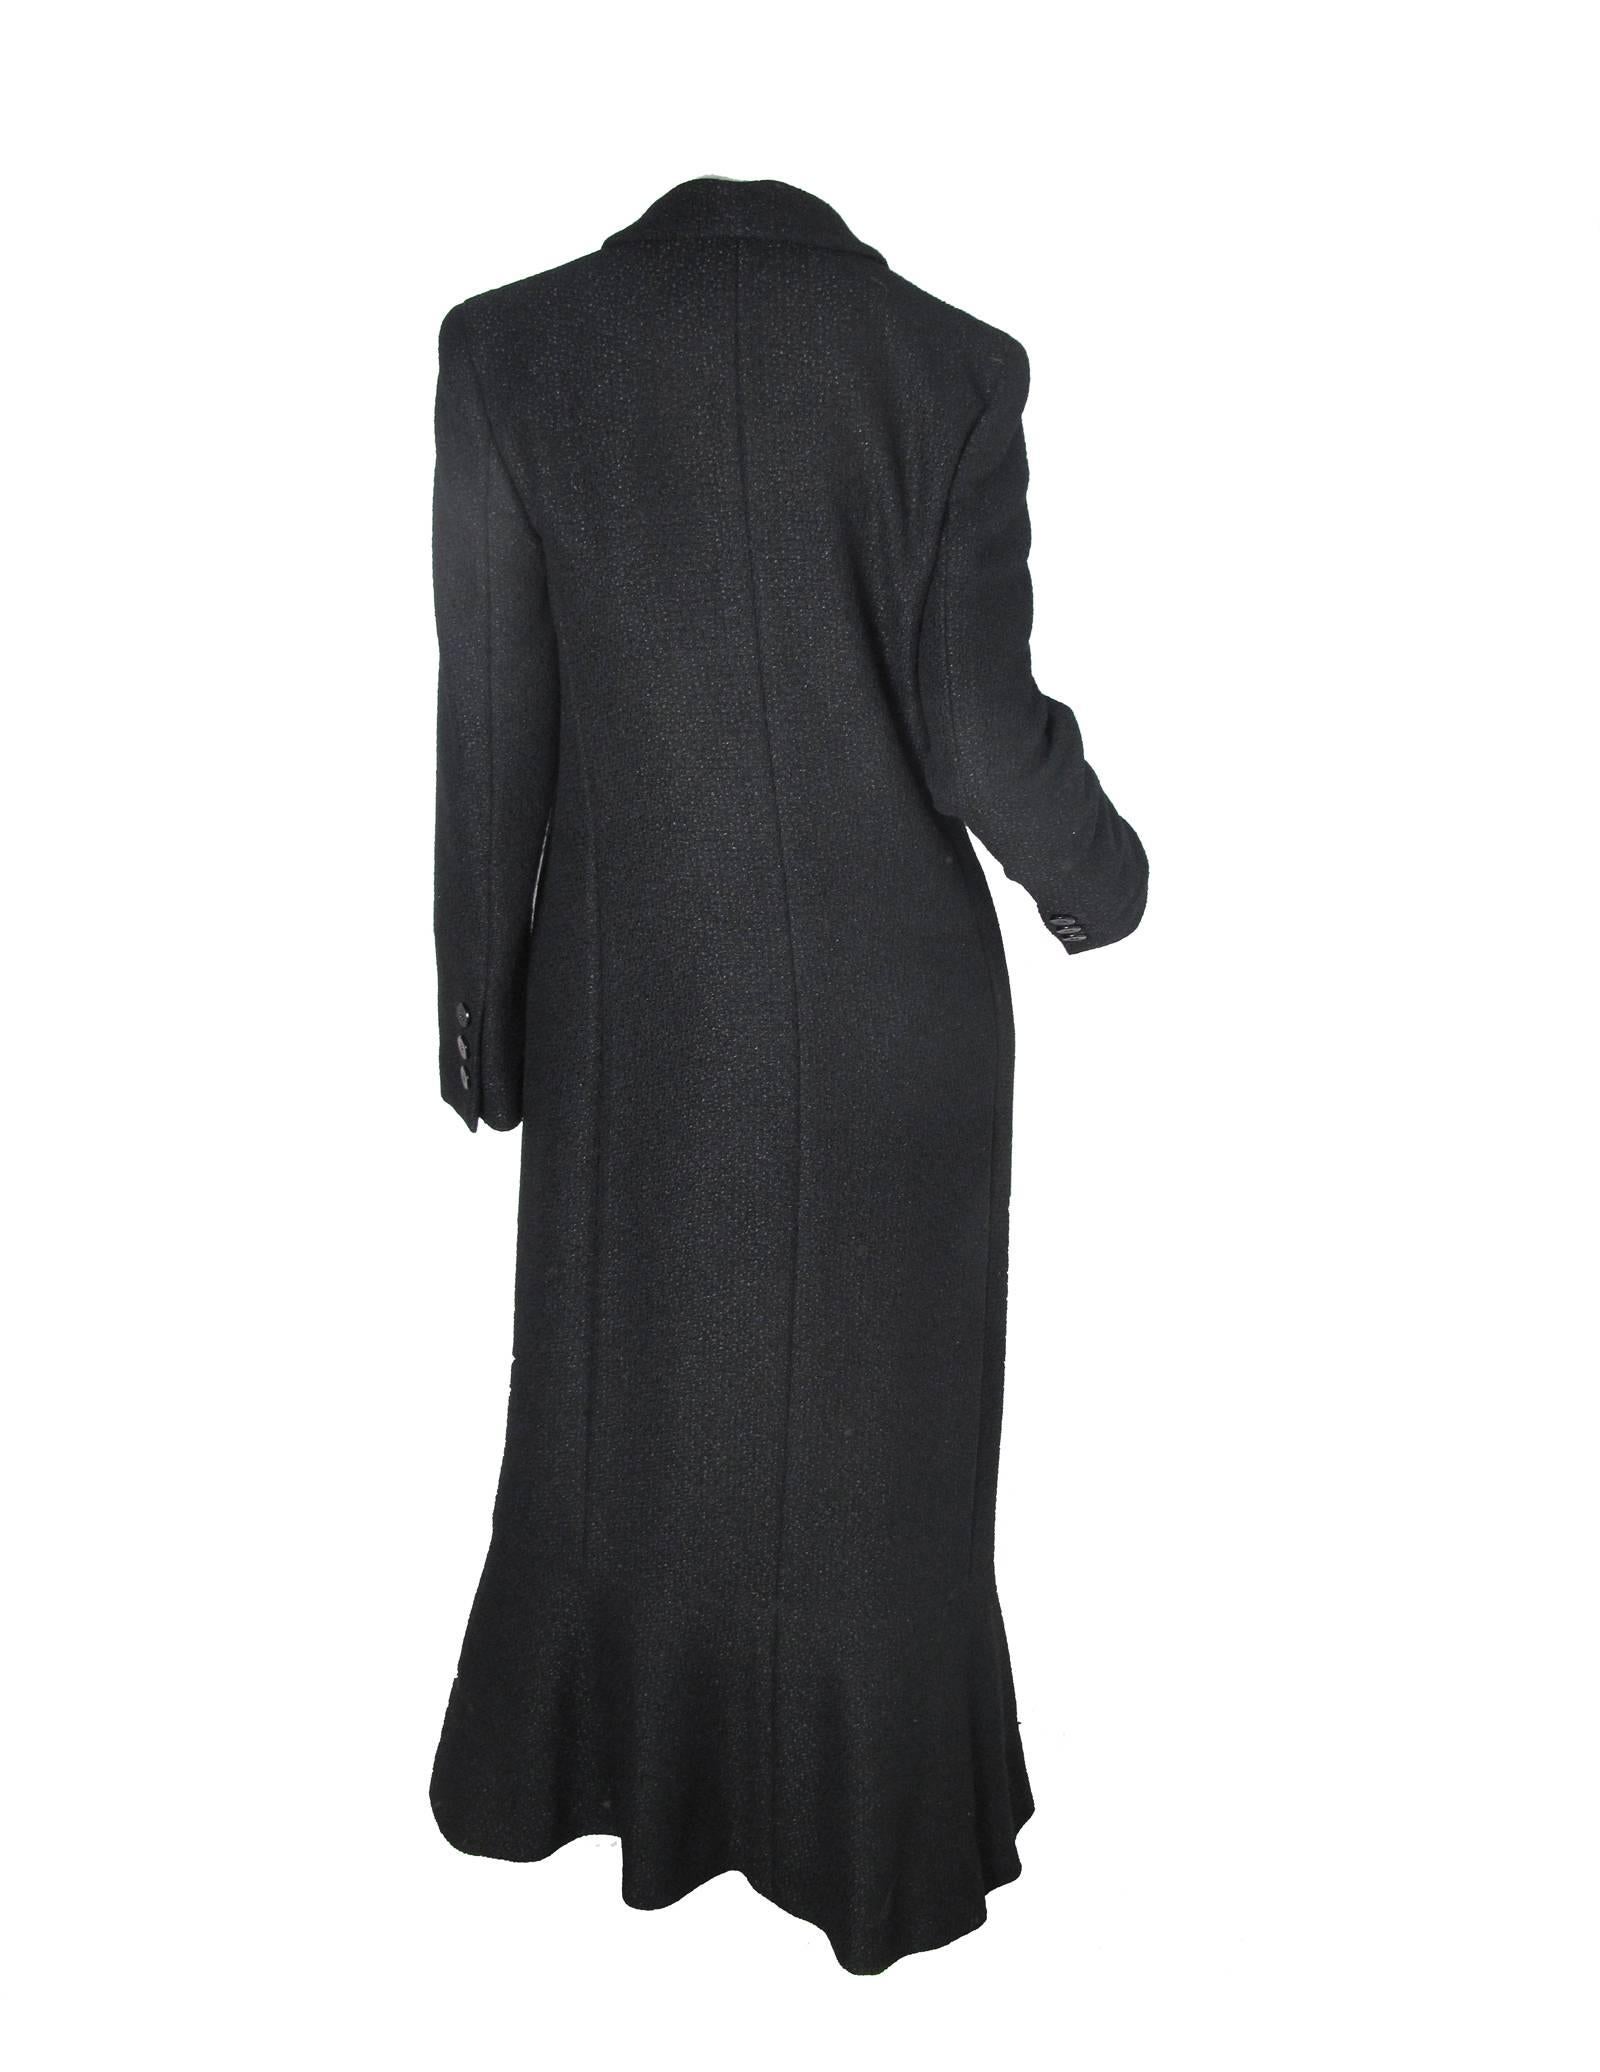 Black Chanel Coat Dress with Ruffle Hem 